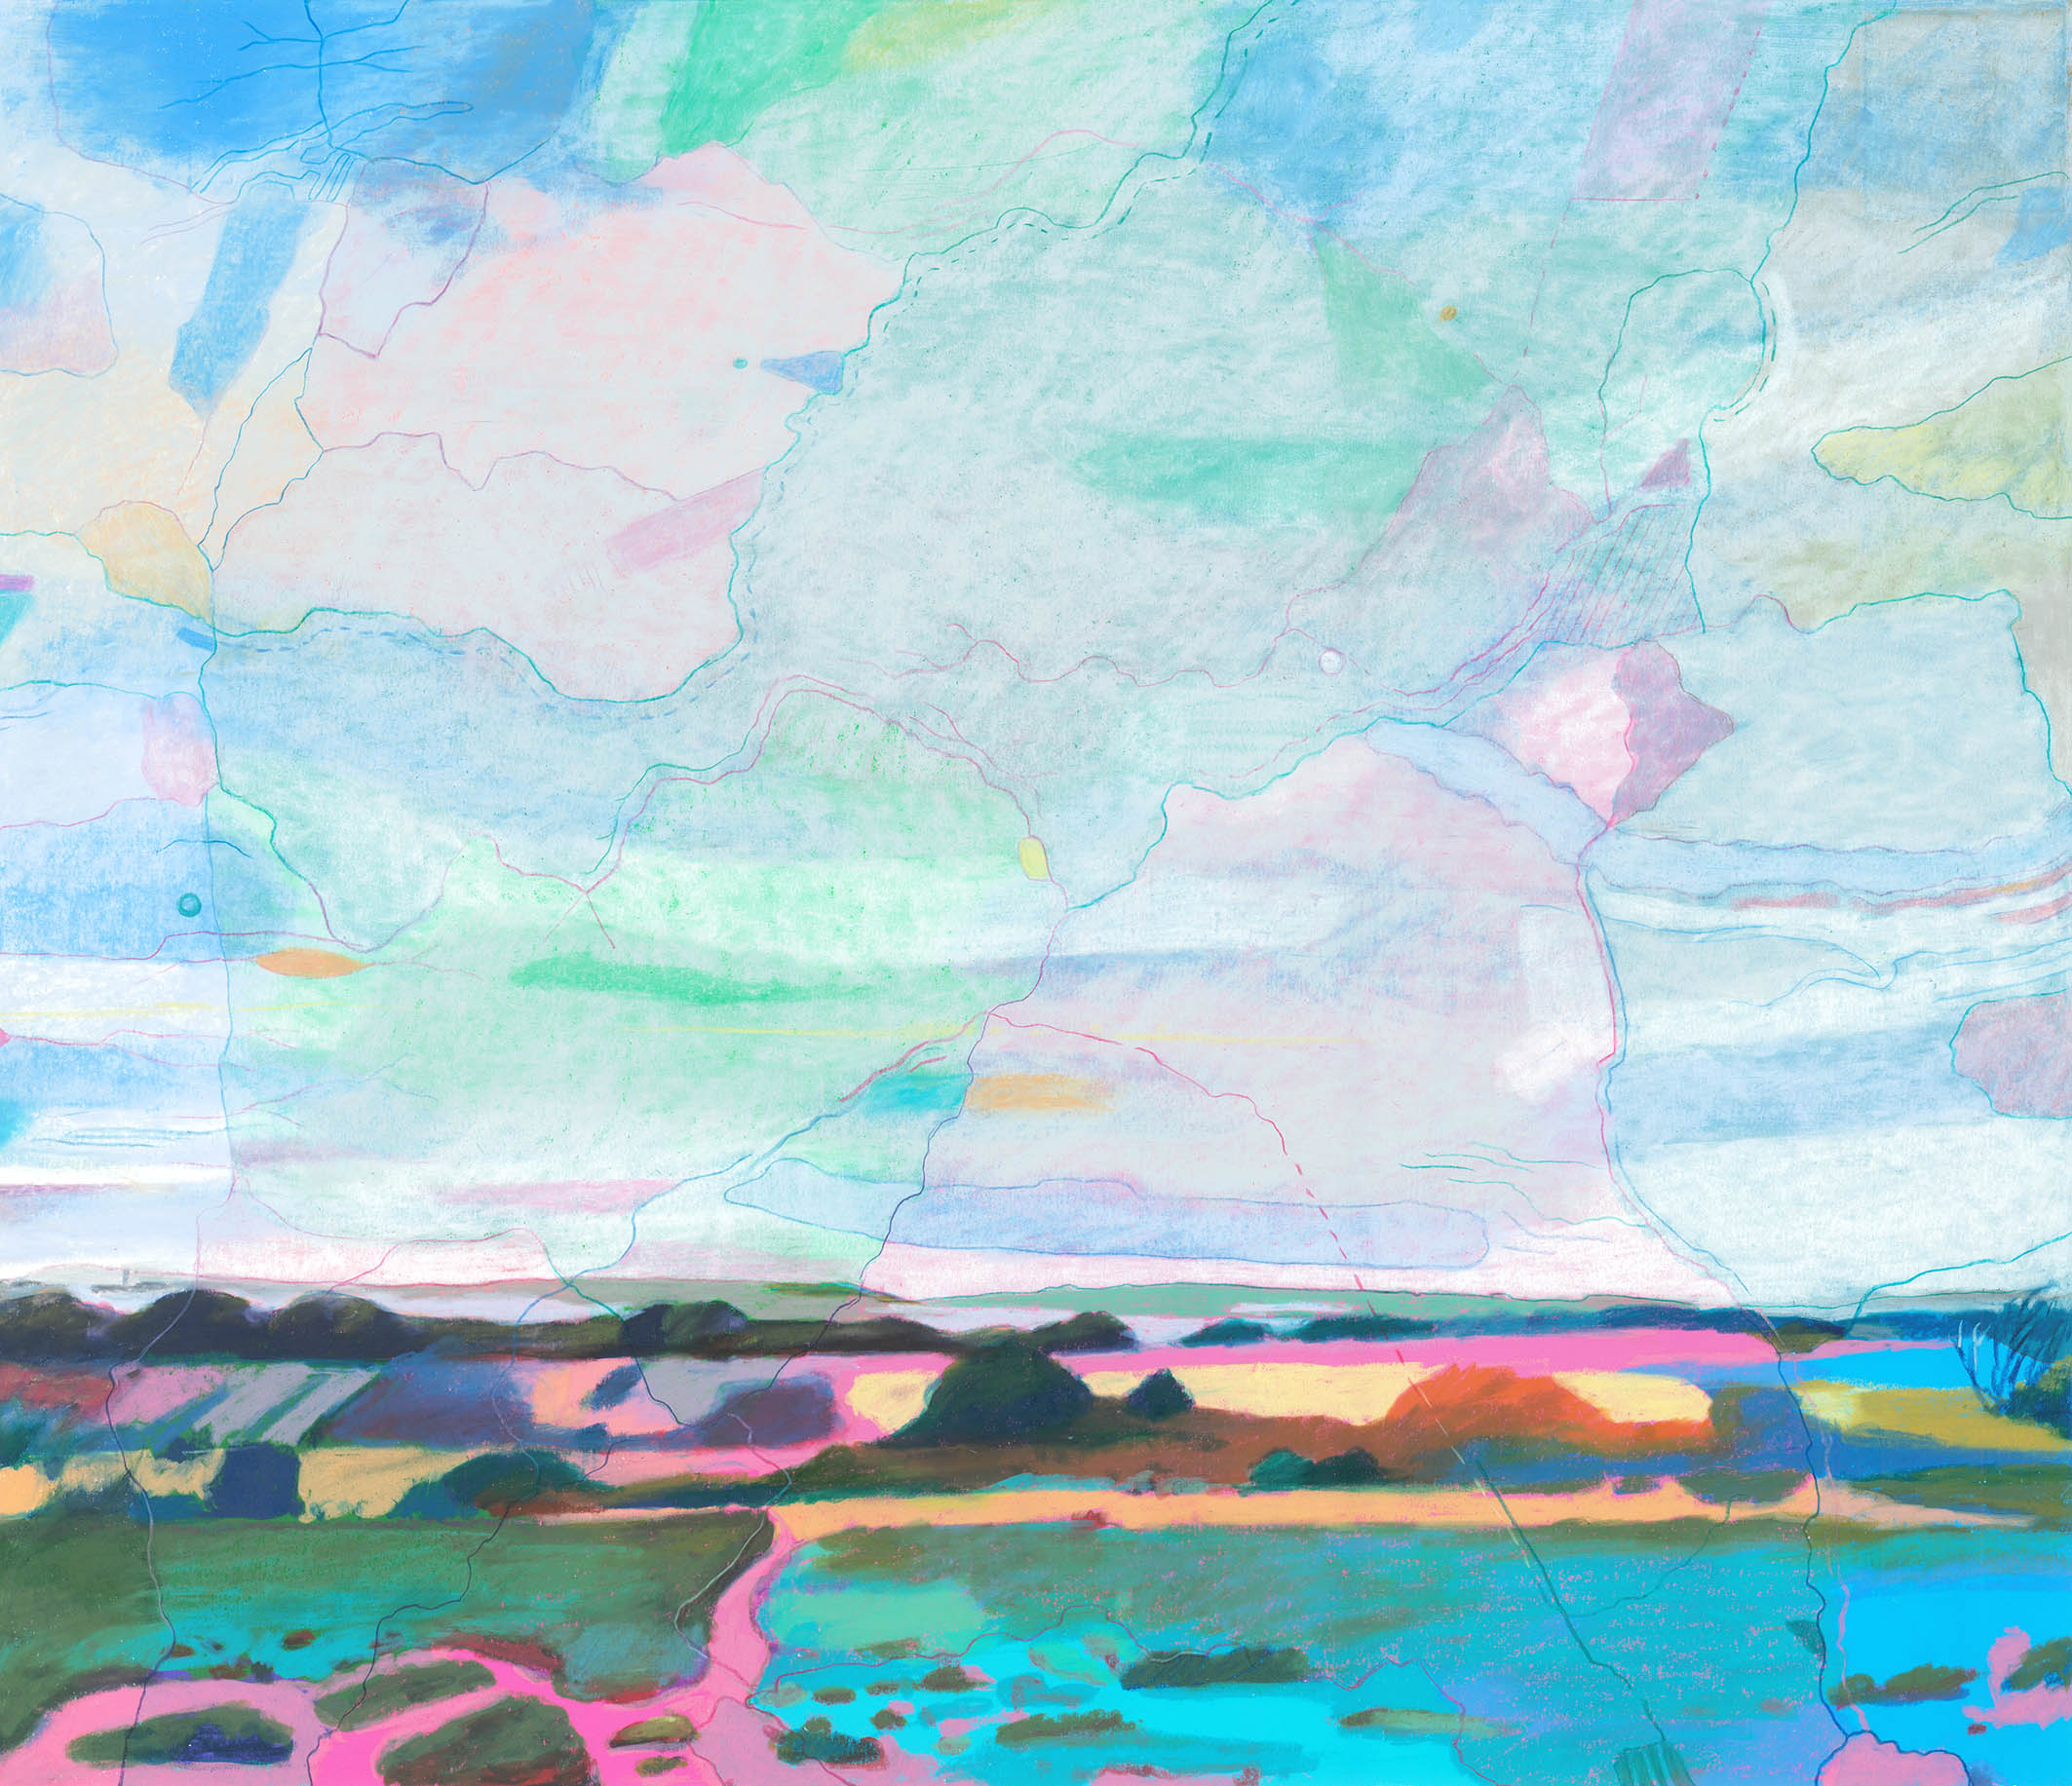   Catching the Landscape  2018 Pastel, pencil, pigment ink on paper.  50 x 43cm 